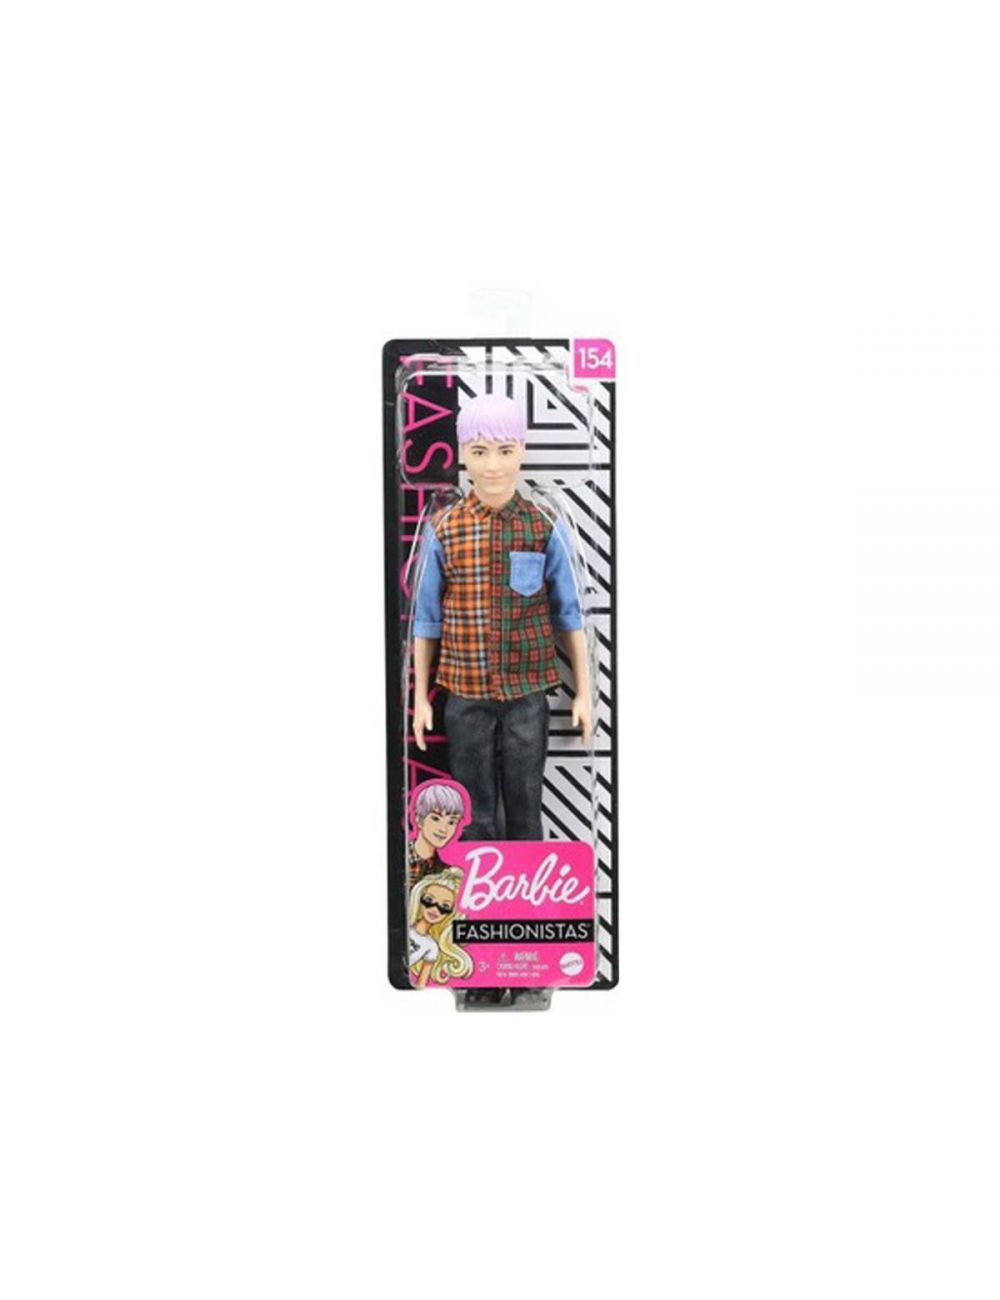 Ken Fashionistas Barbie